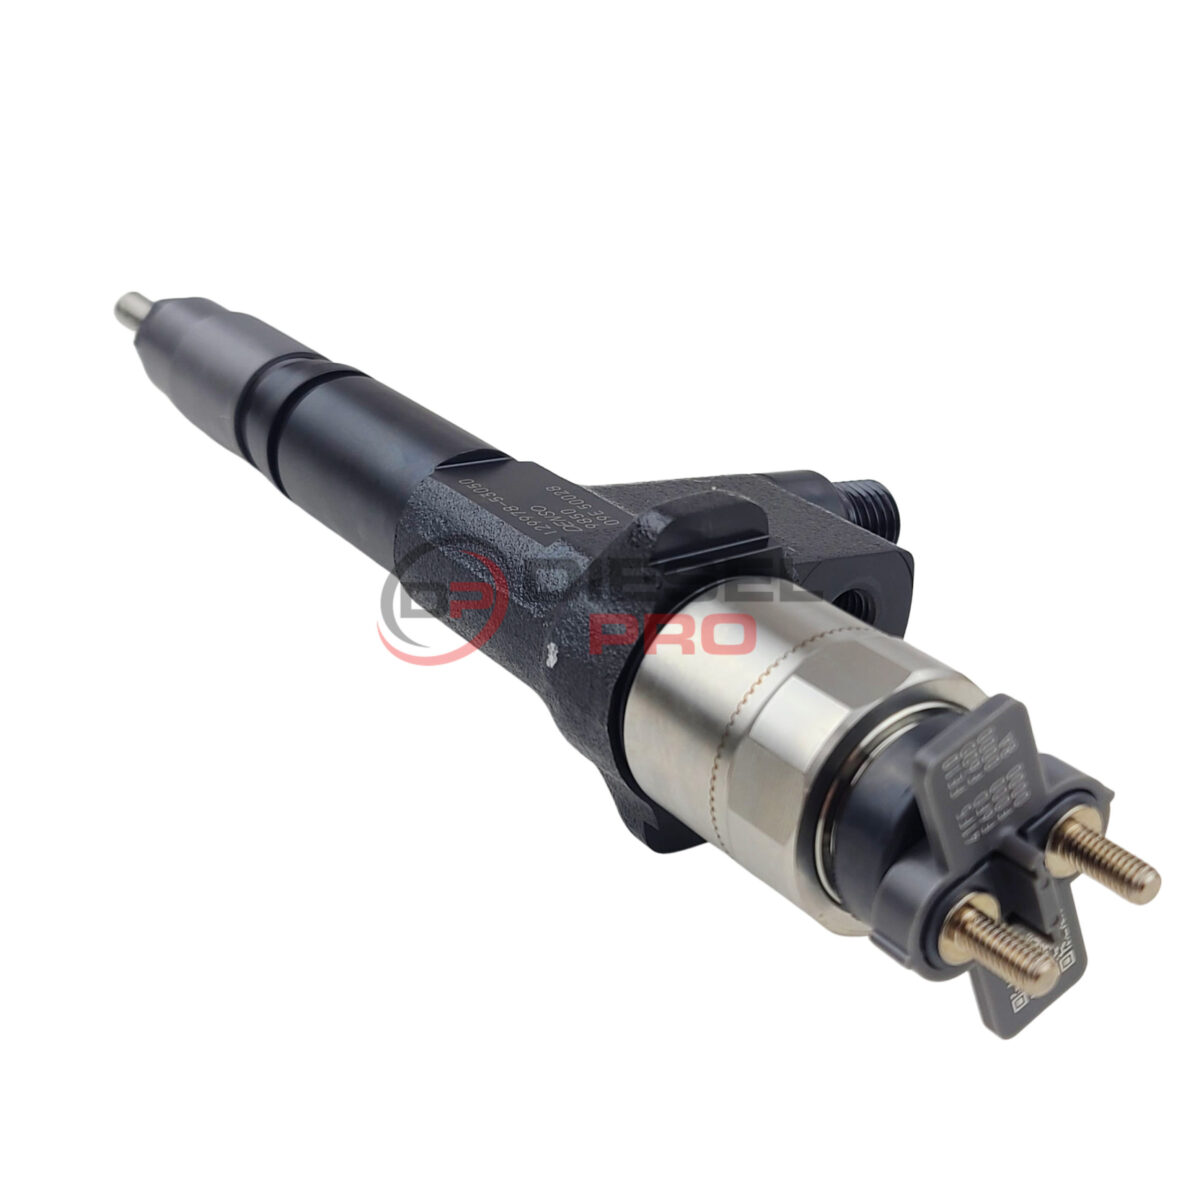 MIU802382 | John Deere Fuel Injector